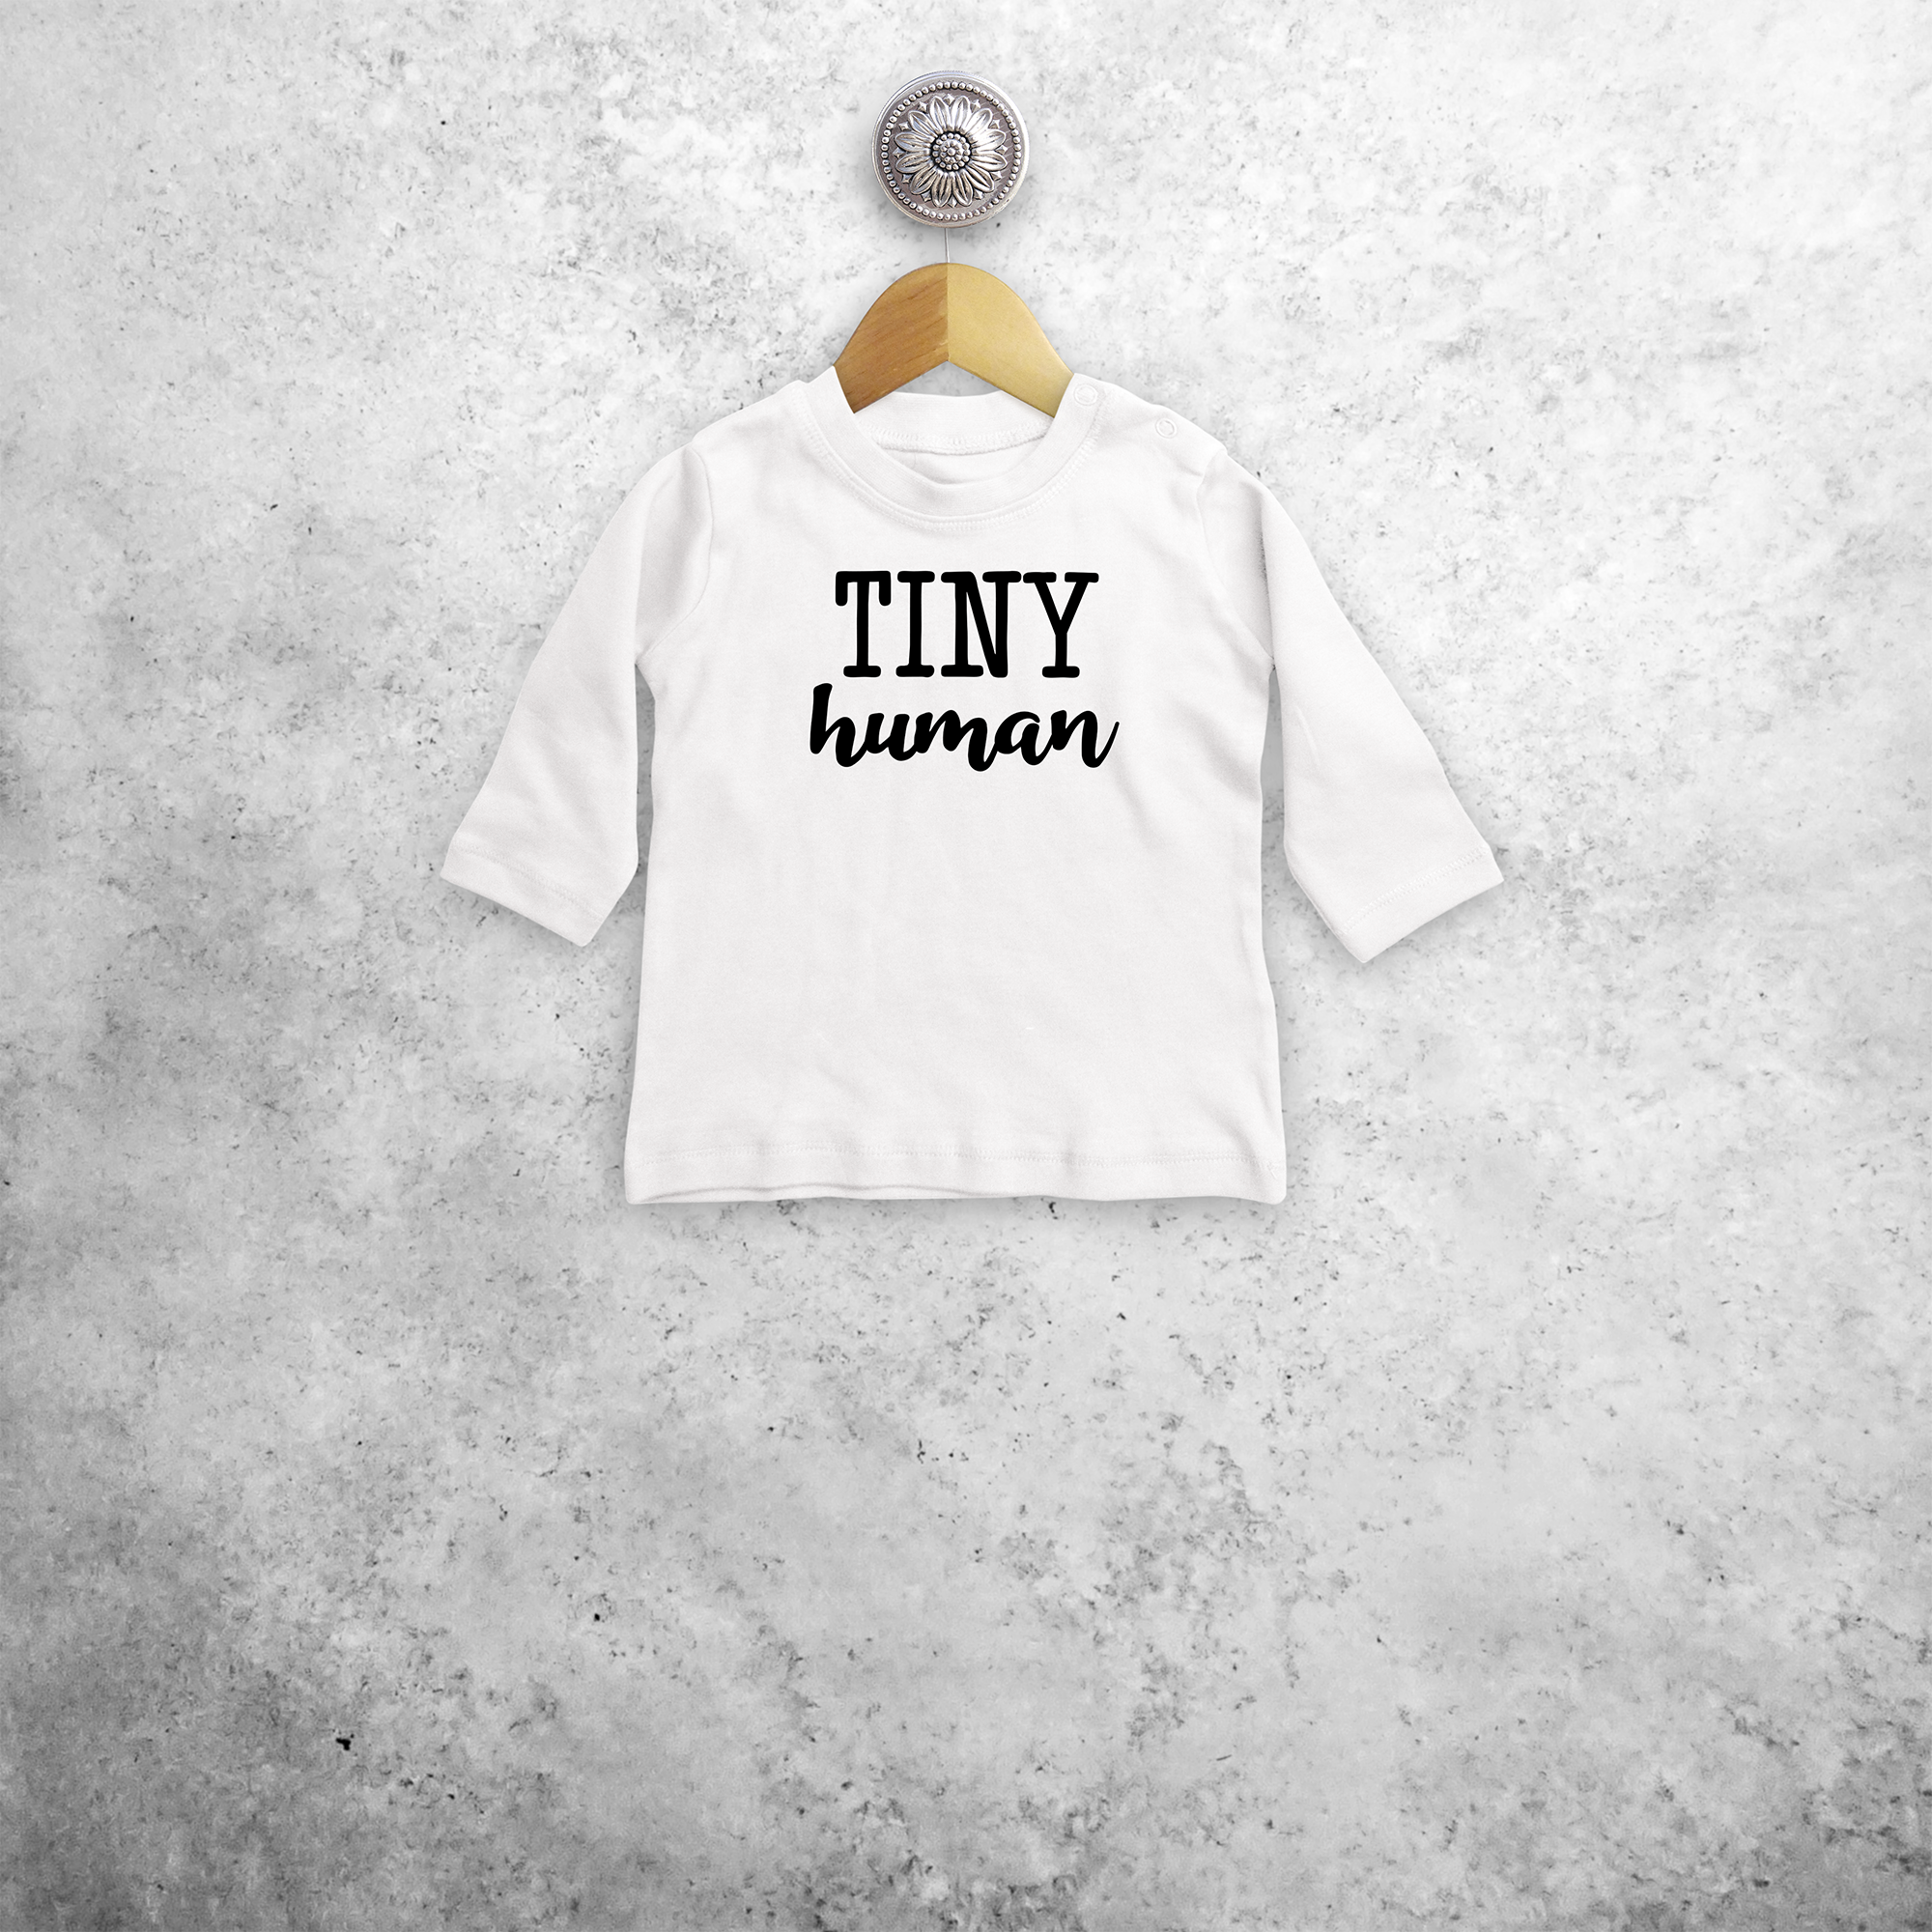 'Tiny human' baby longsleeve shirt